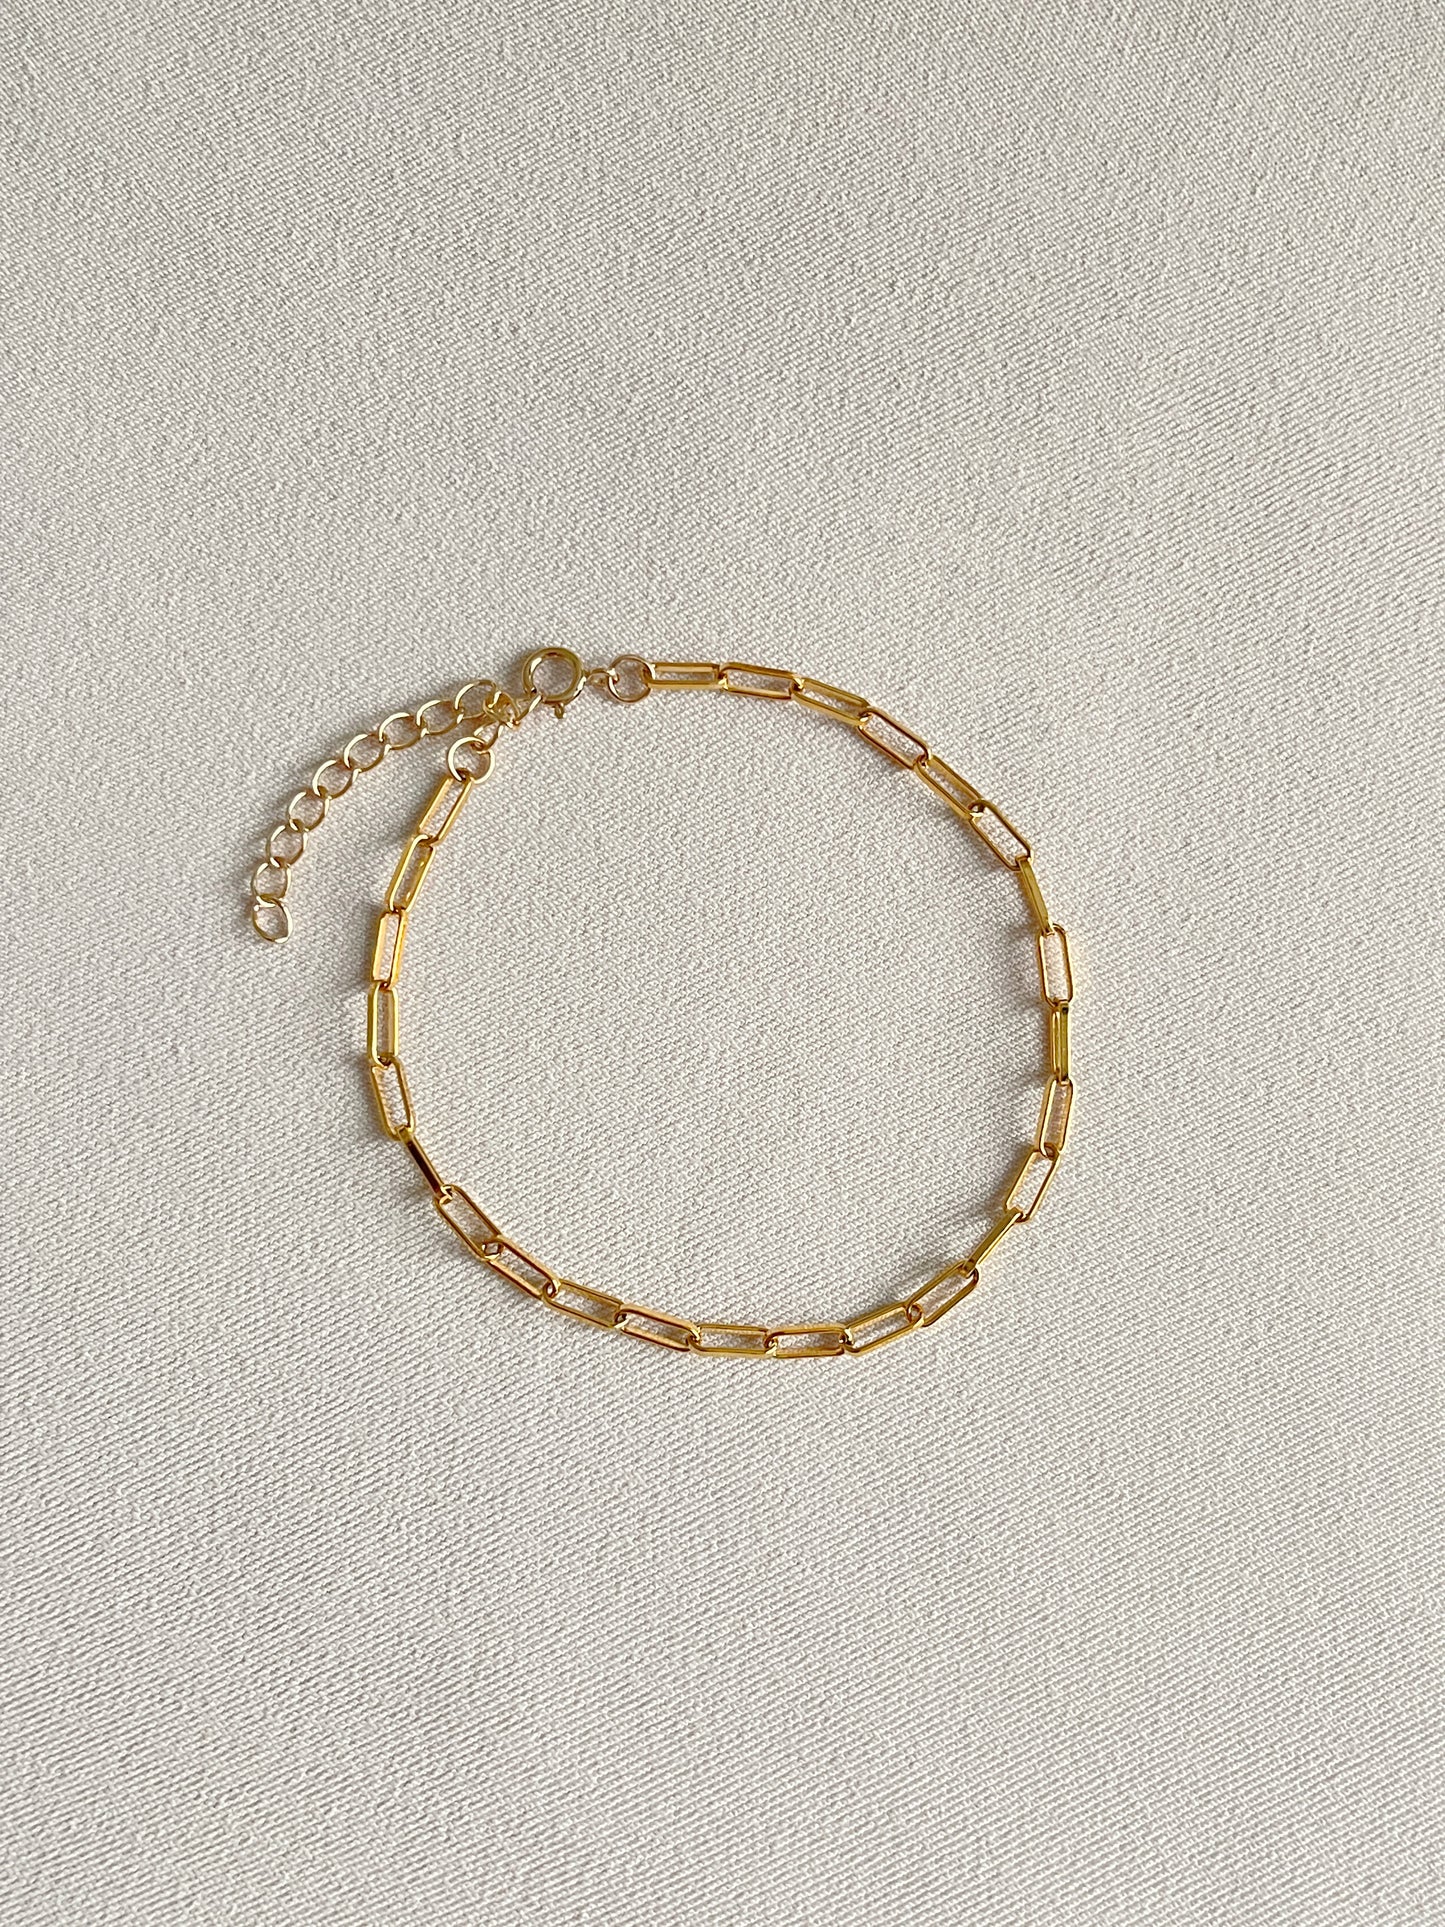 Victoria chain bracelet